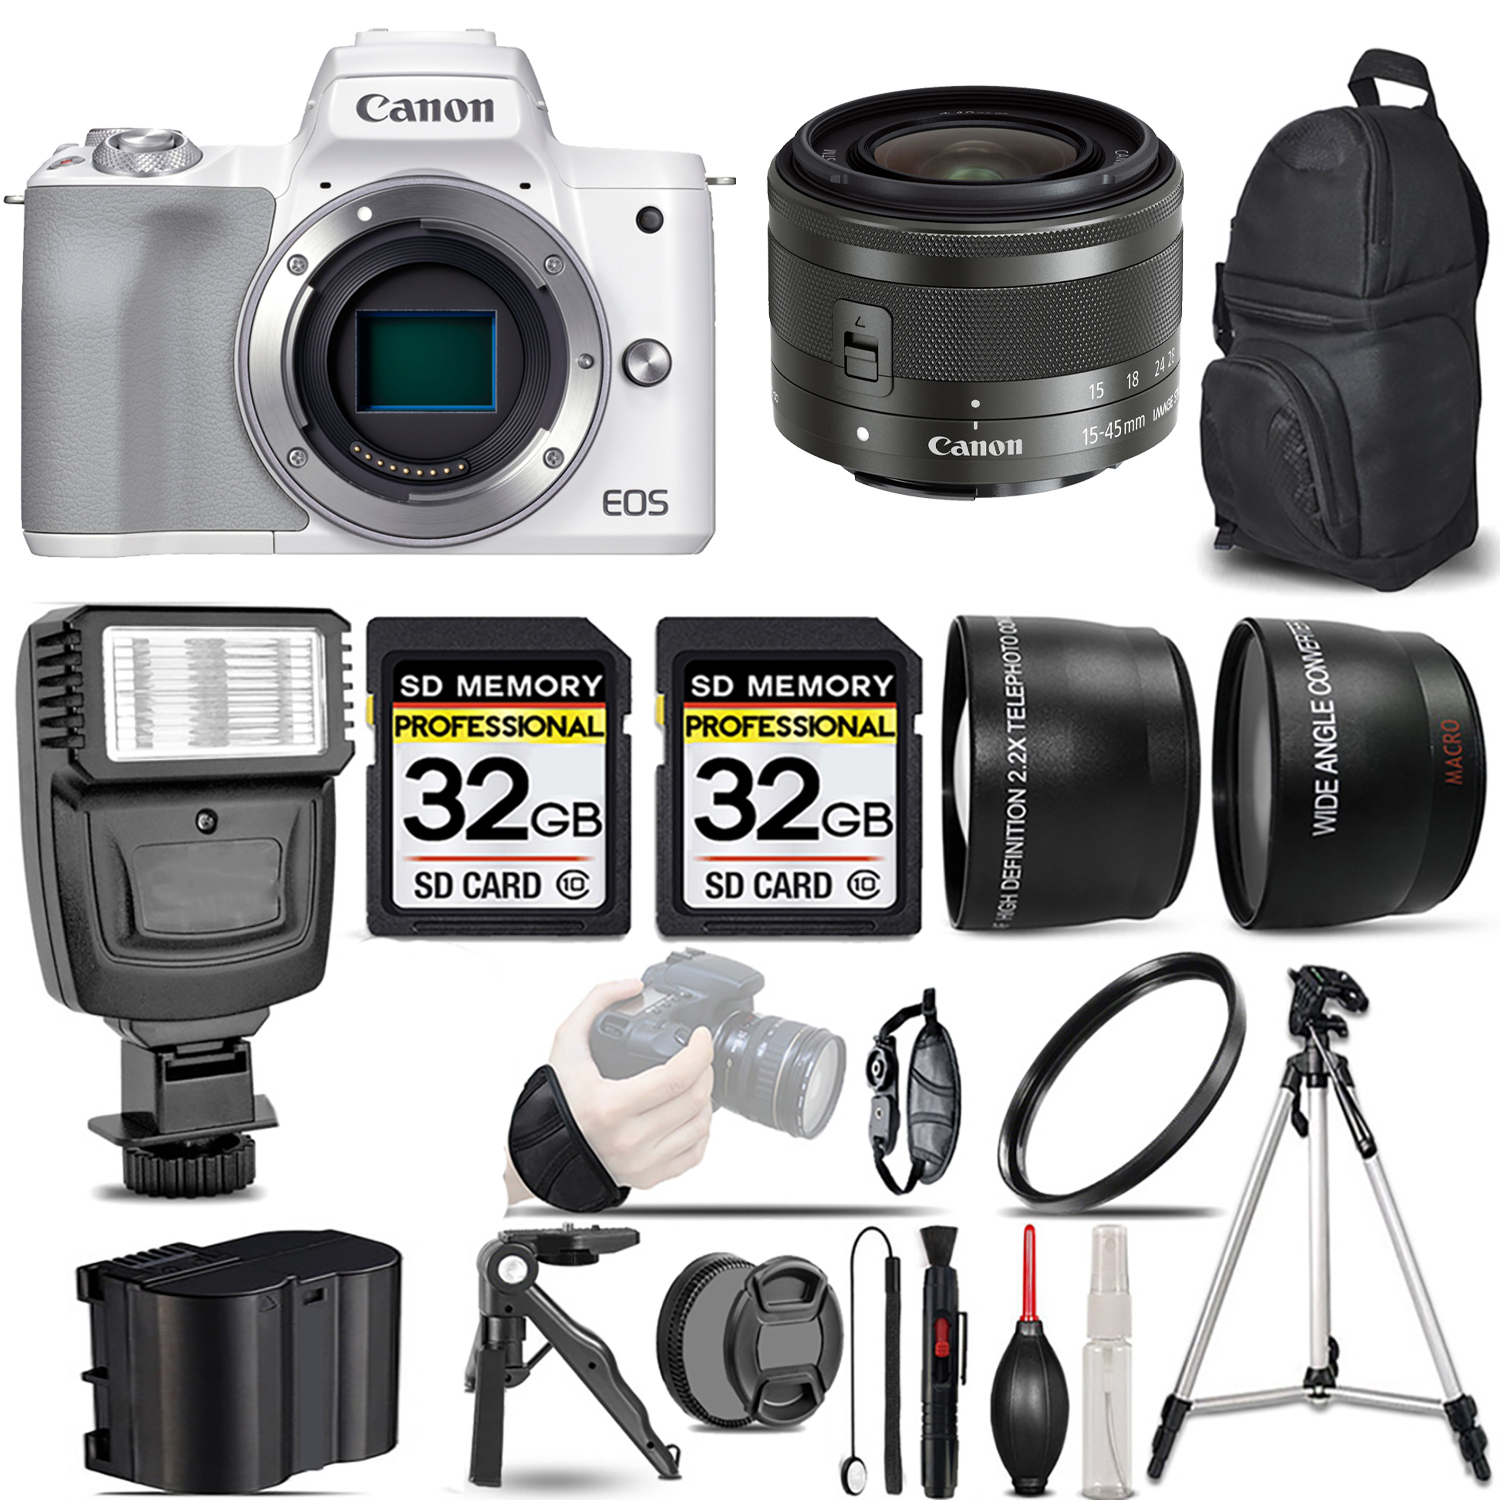 EOS M50 Mark II Camera (White) + 15-45mm IS STM Lens (Graphite) + Flash + 64GB *FREE SHIPPING*